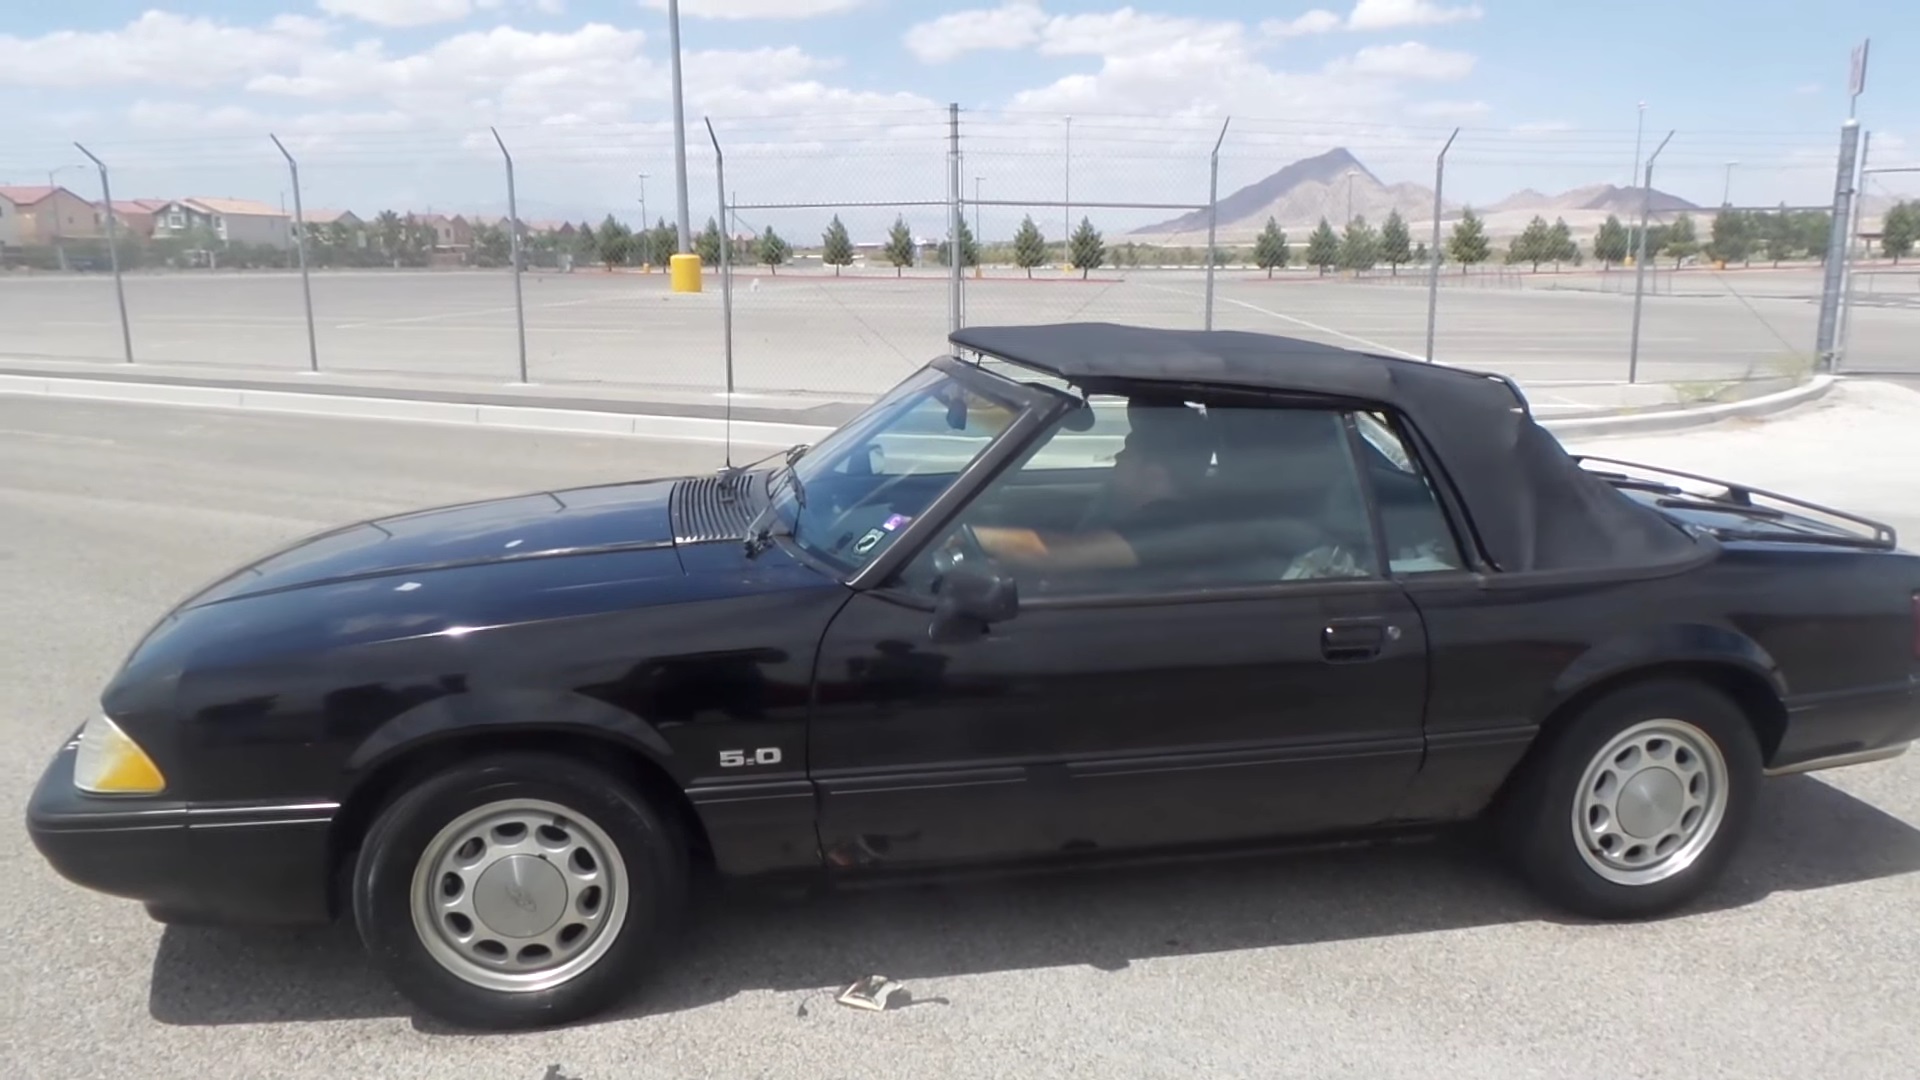 Video: 1989 Ford Mustang LX 5.0L Sport Test Drive